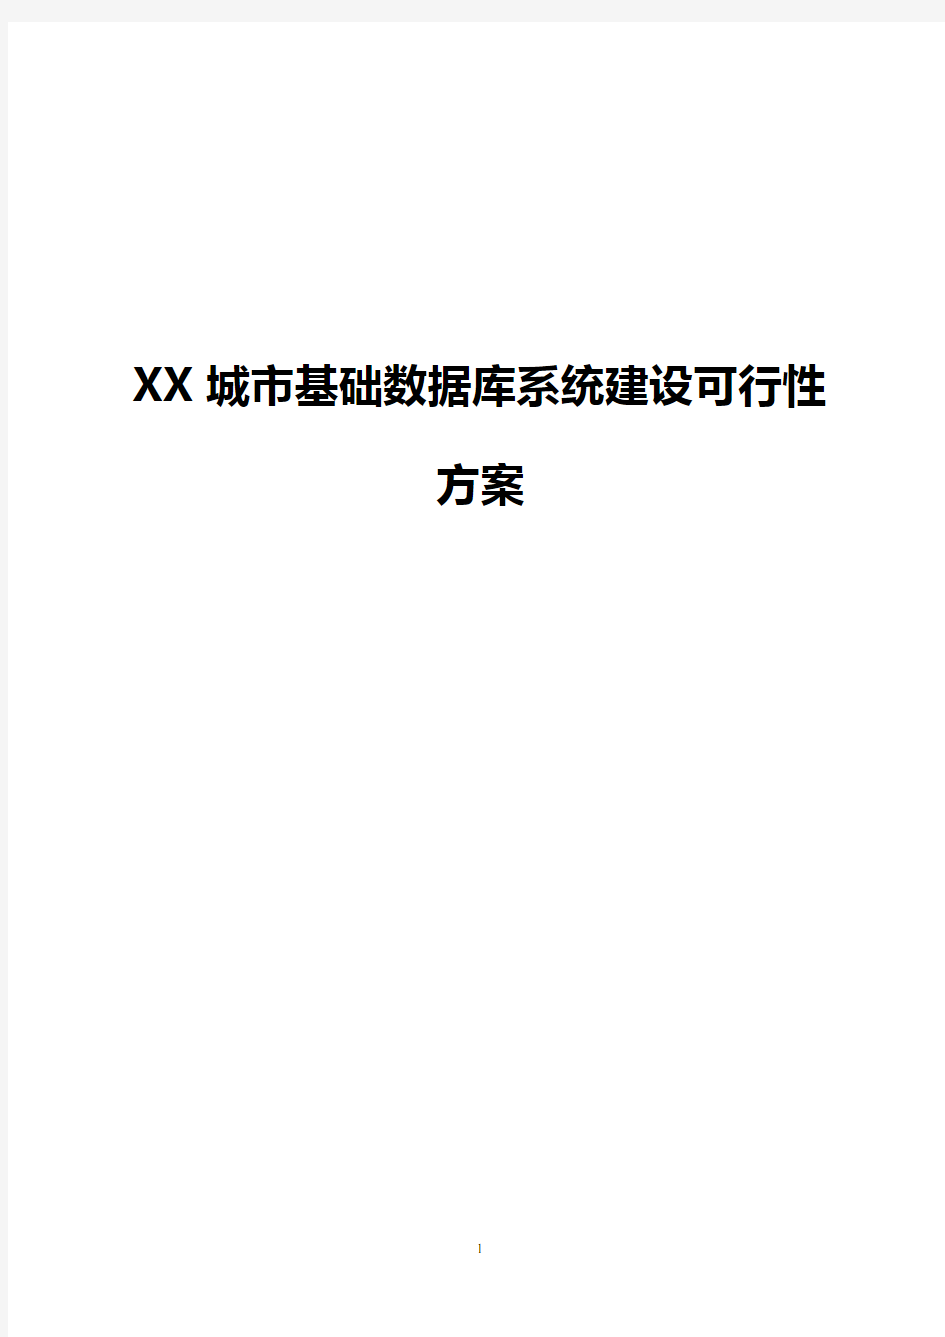 XXX基础数据库系统建设可行性研究报告 (1)